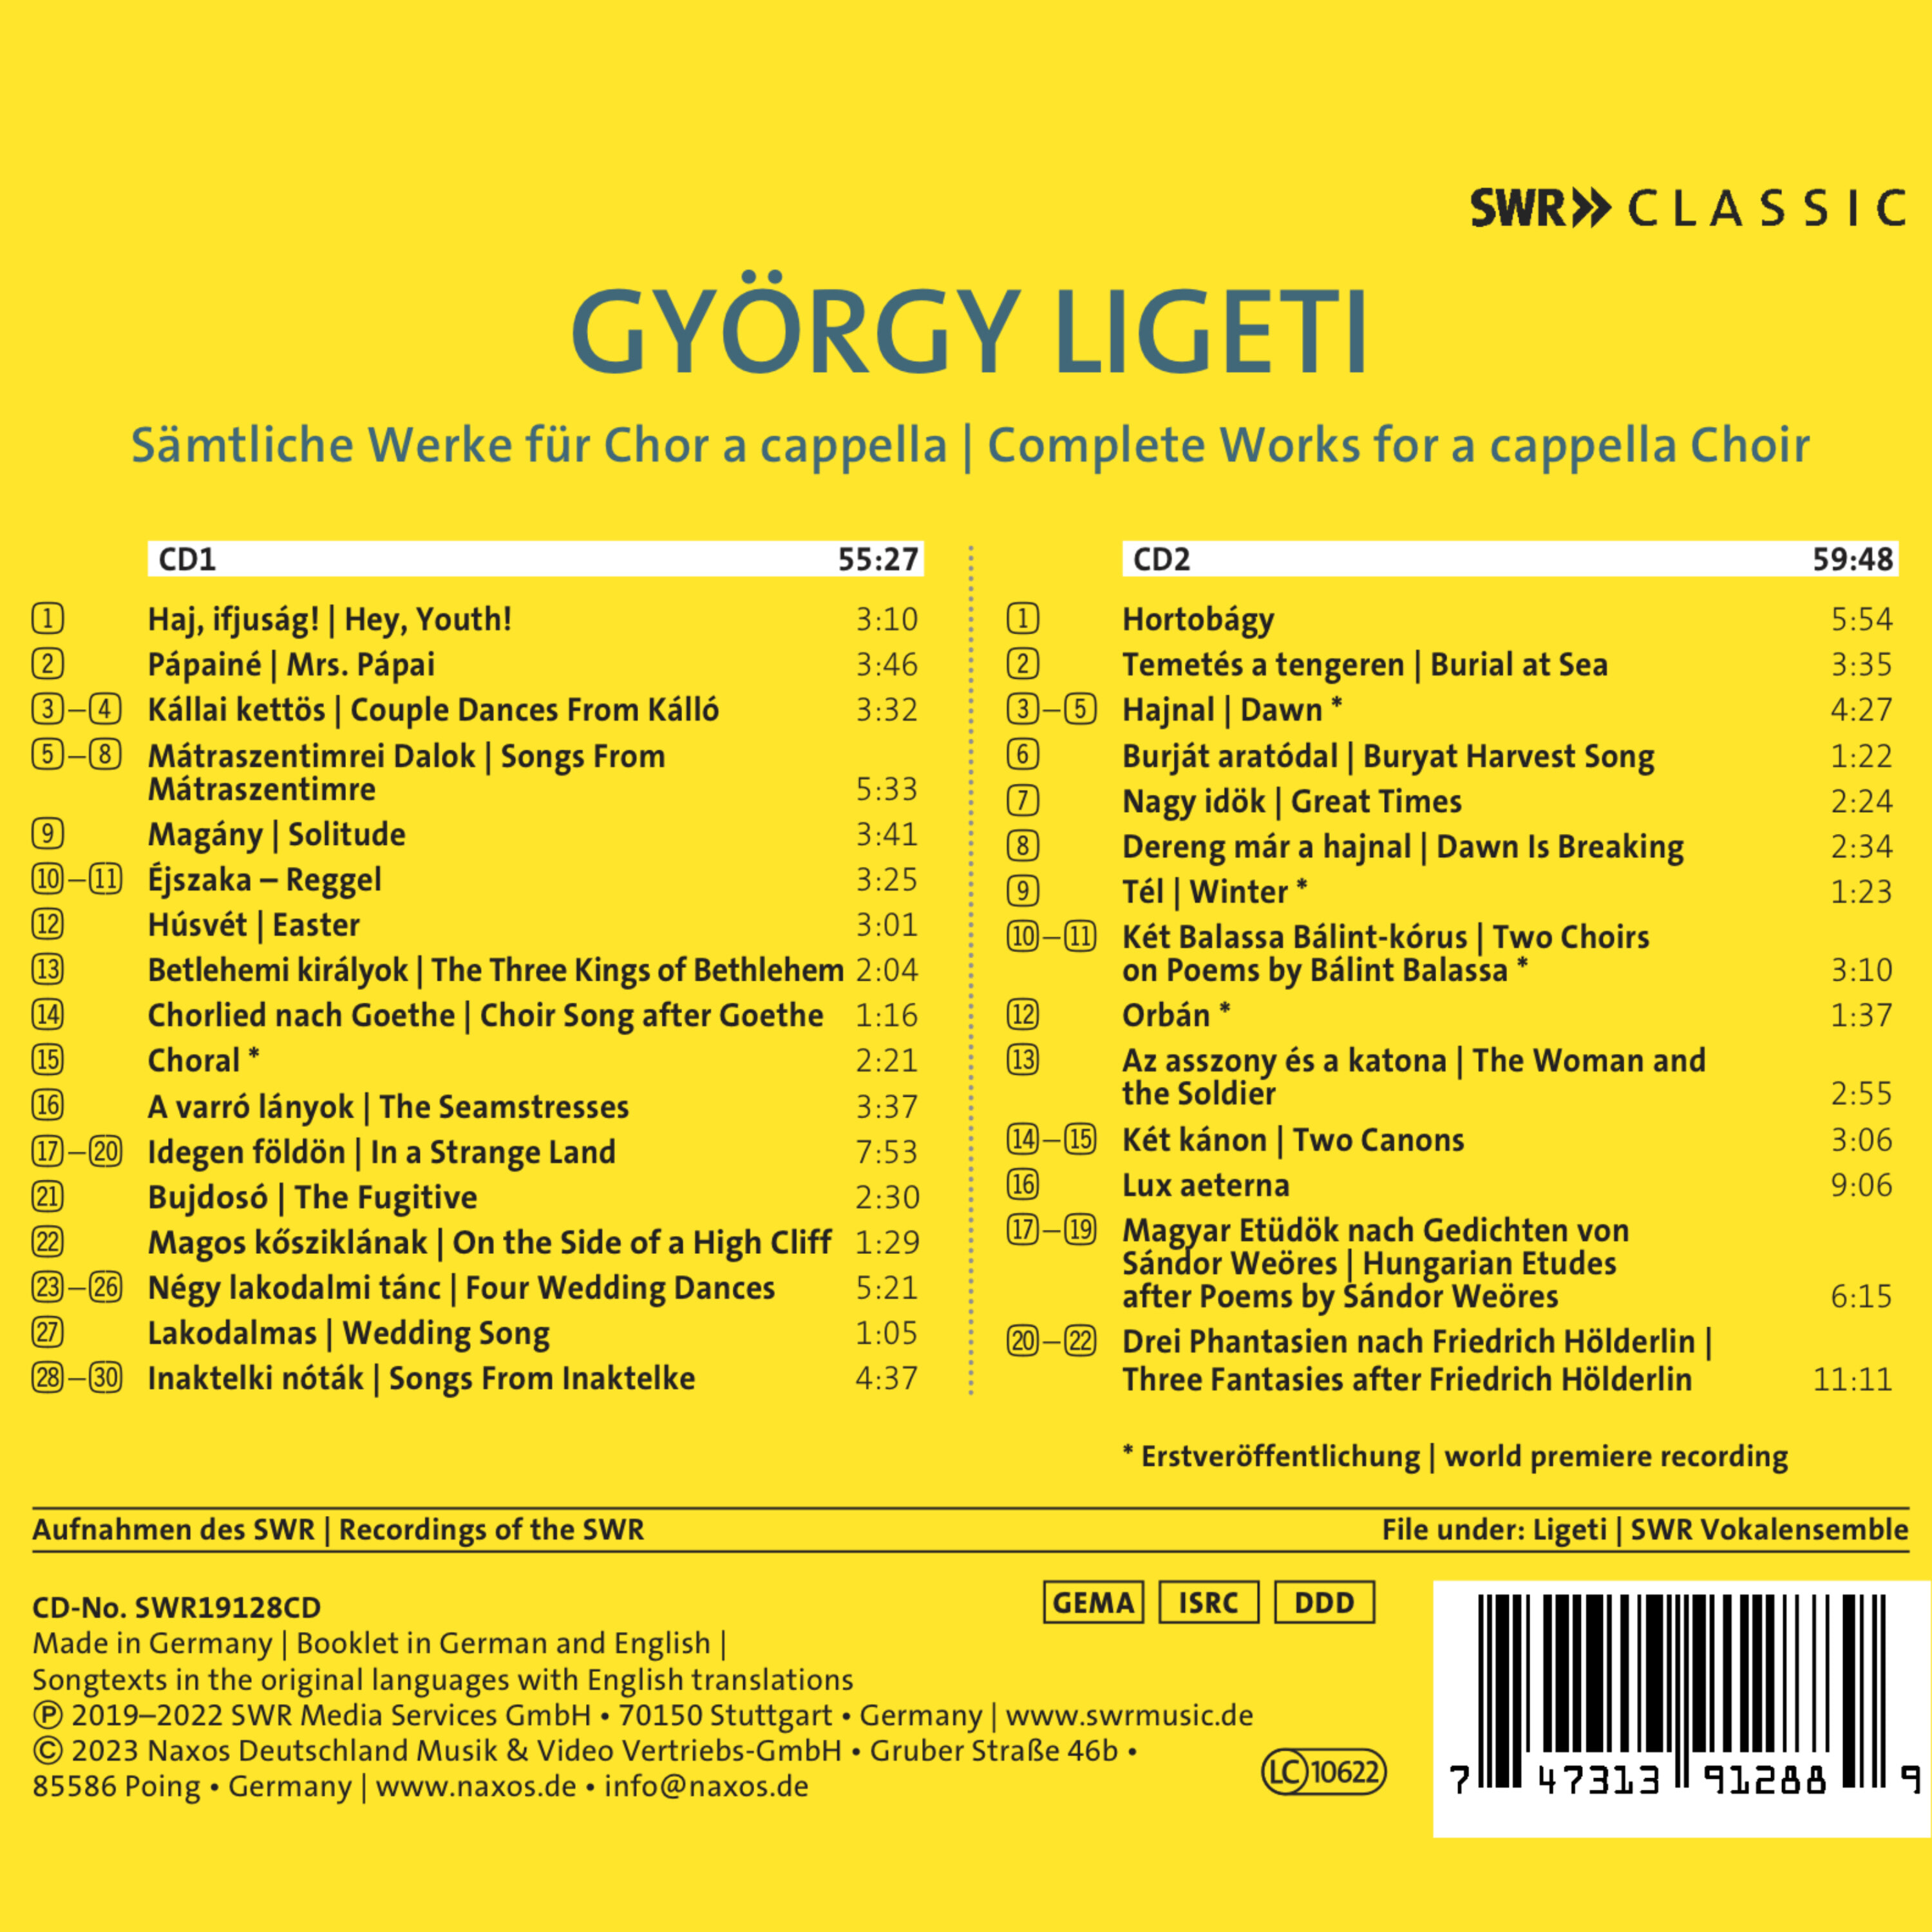 Yuval Weinberg 리게티: 아카펠라 합창음악 전곡 (Ligeti: Complete Works For A Cappella Choir)